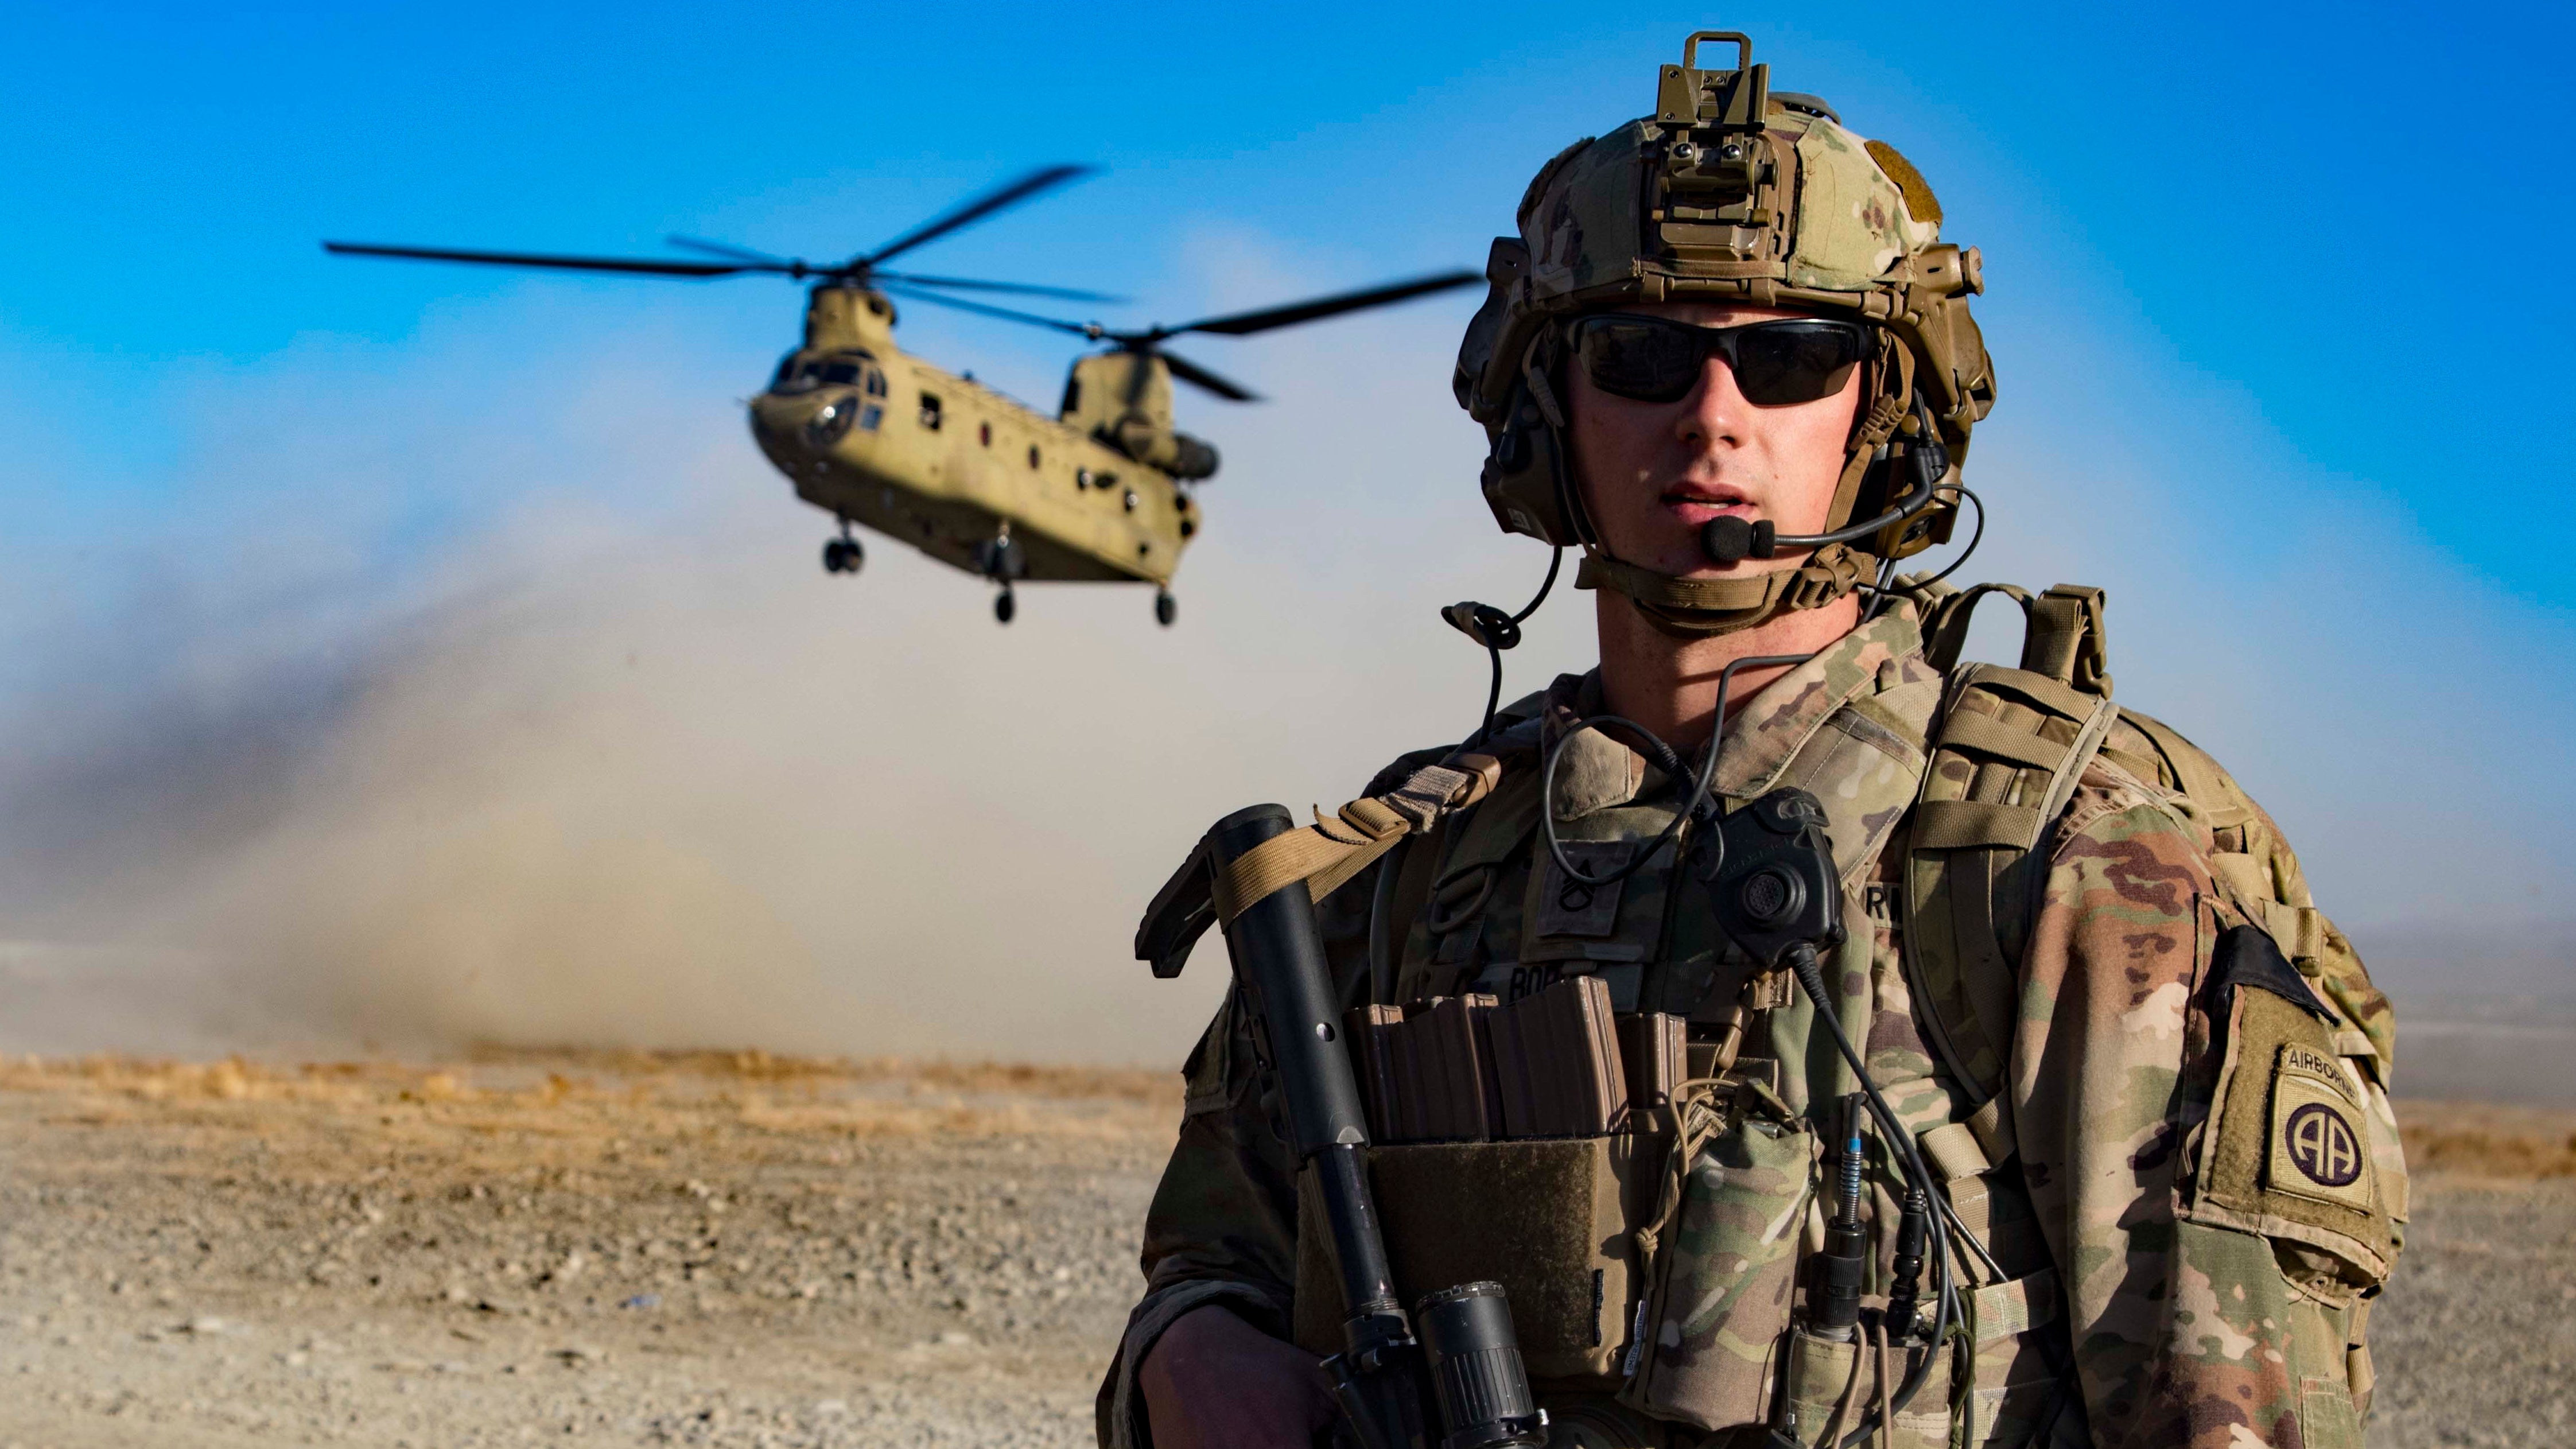 Нато в ираке. Американские войска в Афганистане. Армия США В Афганистане 2001. Войска США В Афганистане 2001.